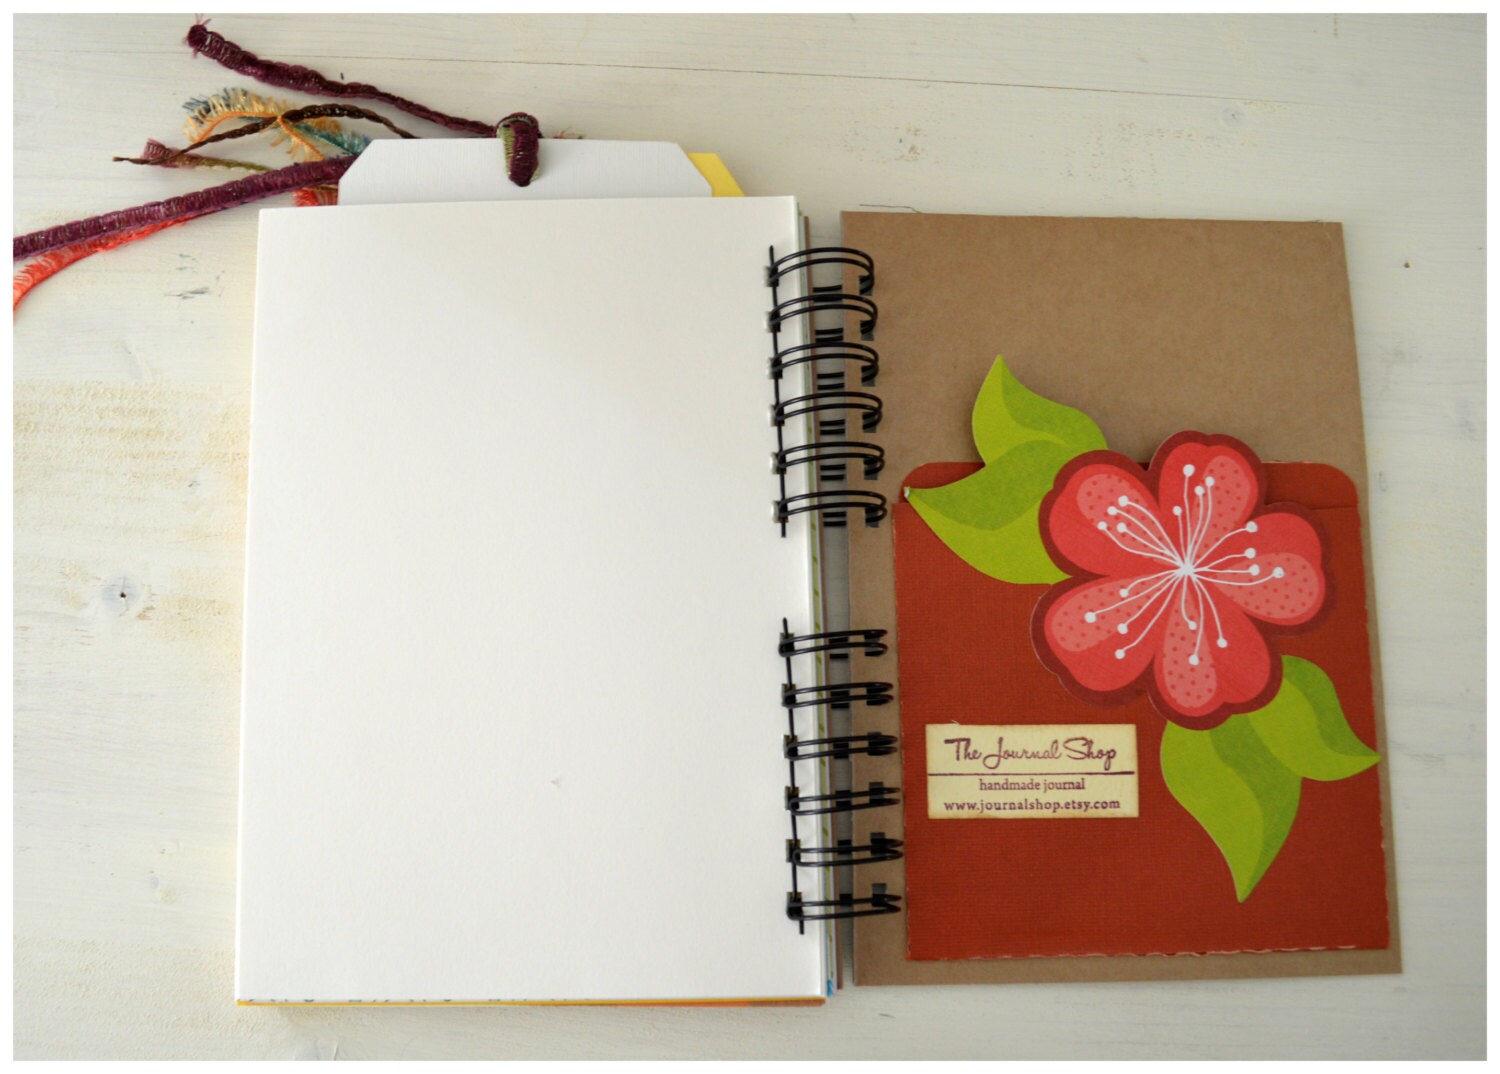 Children Art Journaling Box Kit - Crossroads –